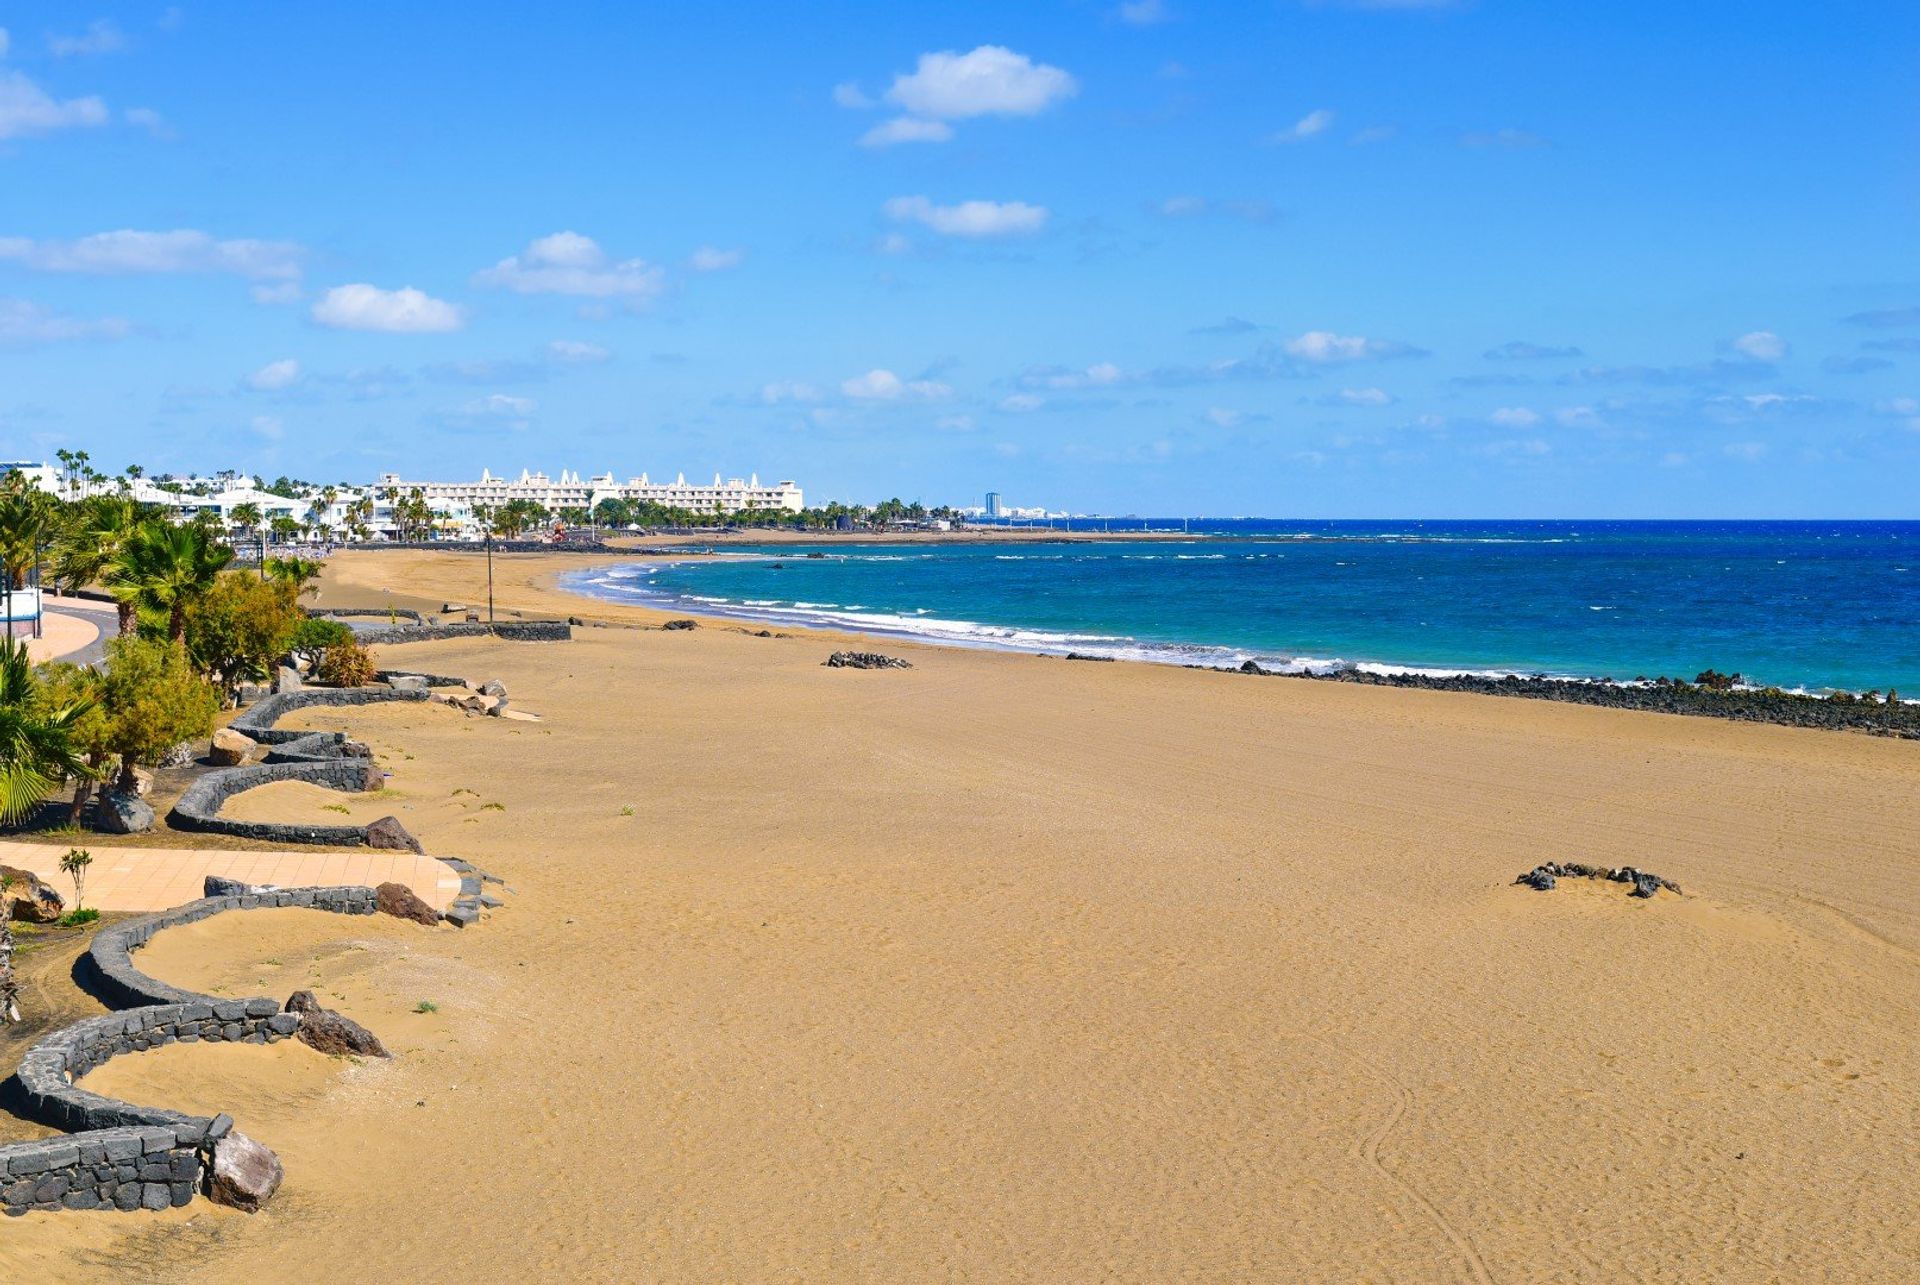 Matagorda beach is part of a trio of Blue Flag beaches around Puerto Del Carmen